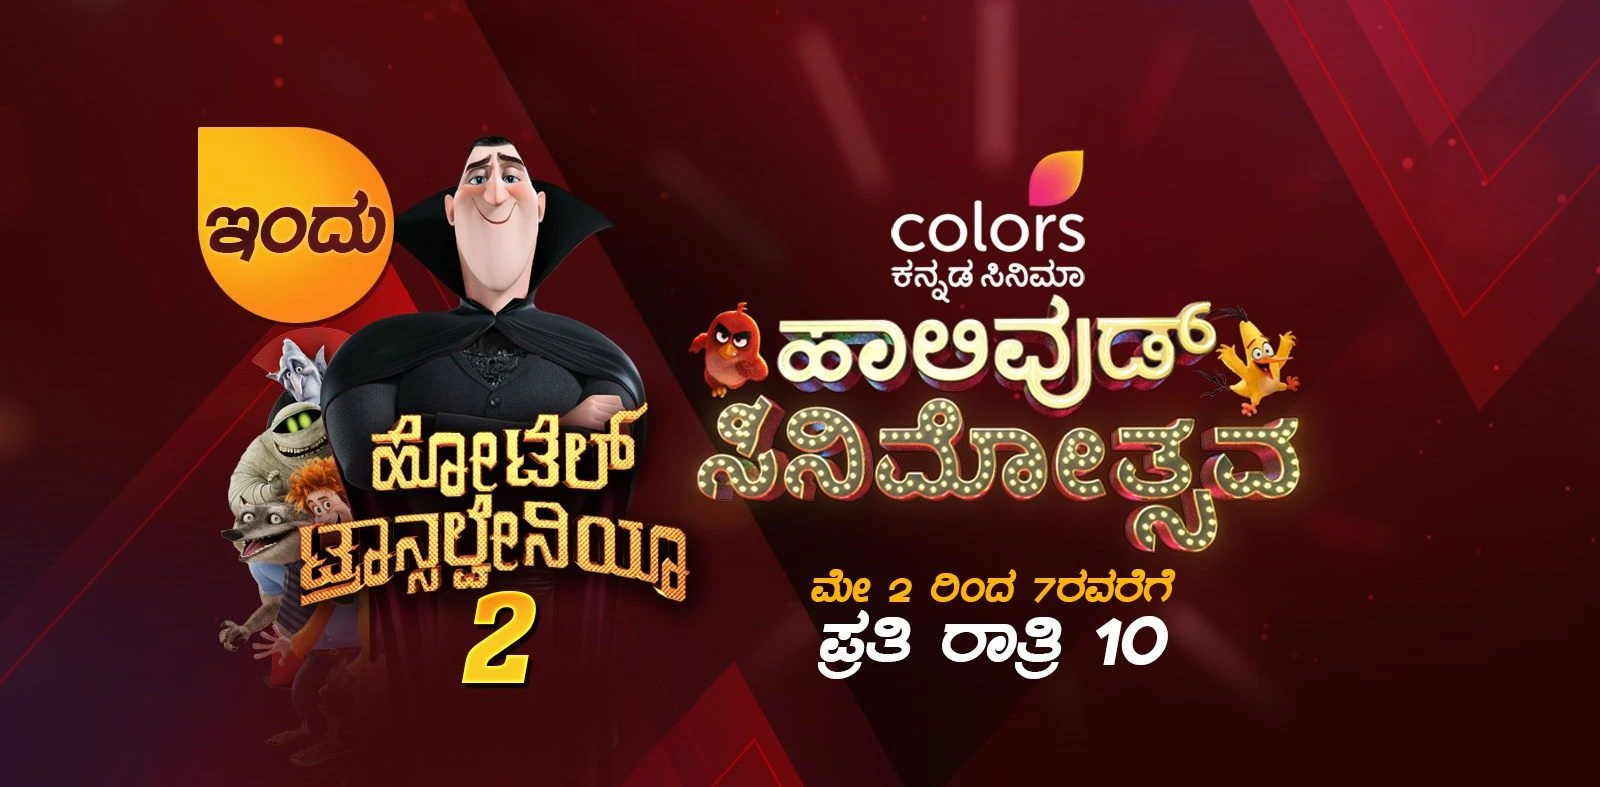 Colors Kannada Cinema Will Telecast The India Vs Australia One Cricket Matches in Kannada - JioCinema Streaming Free 3